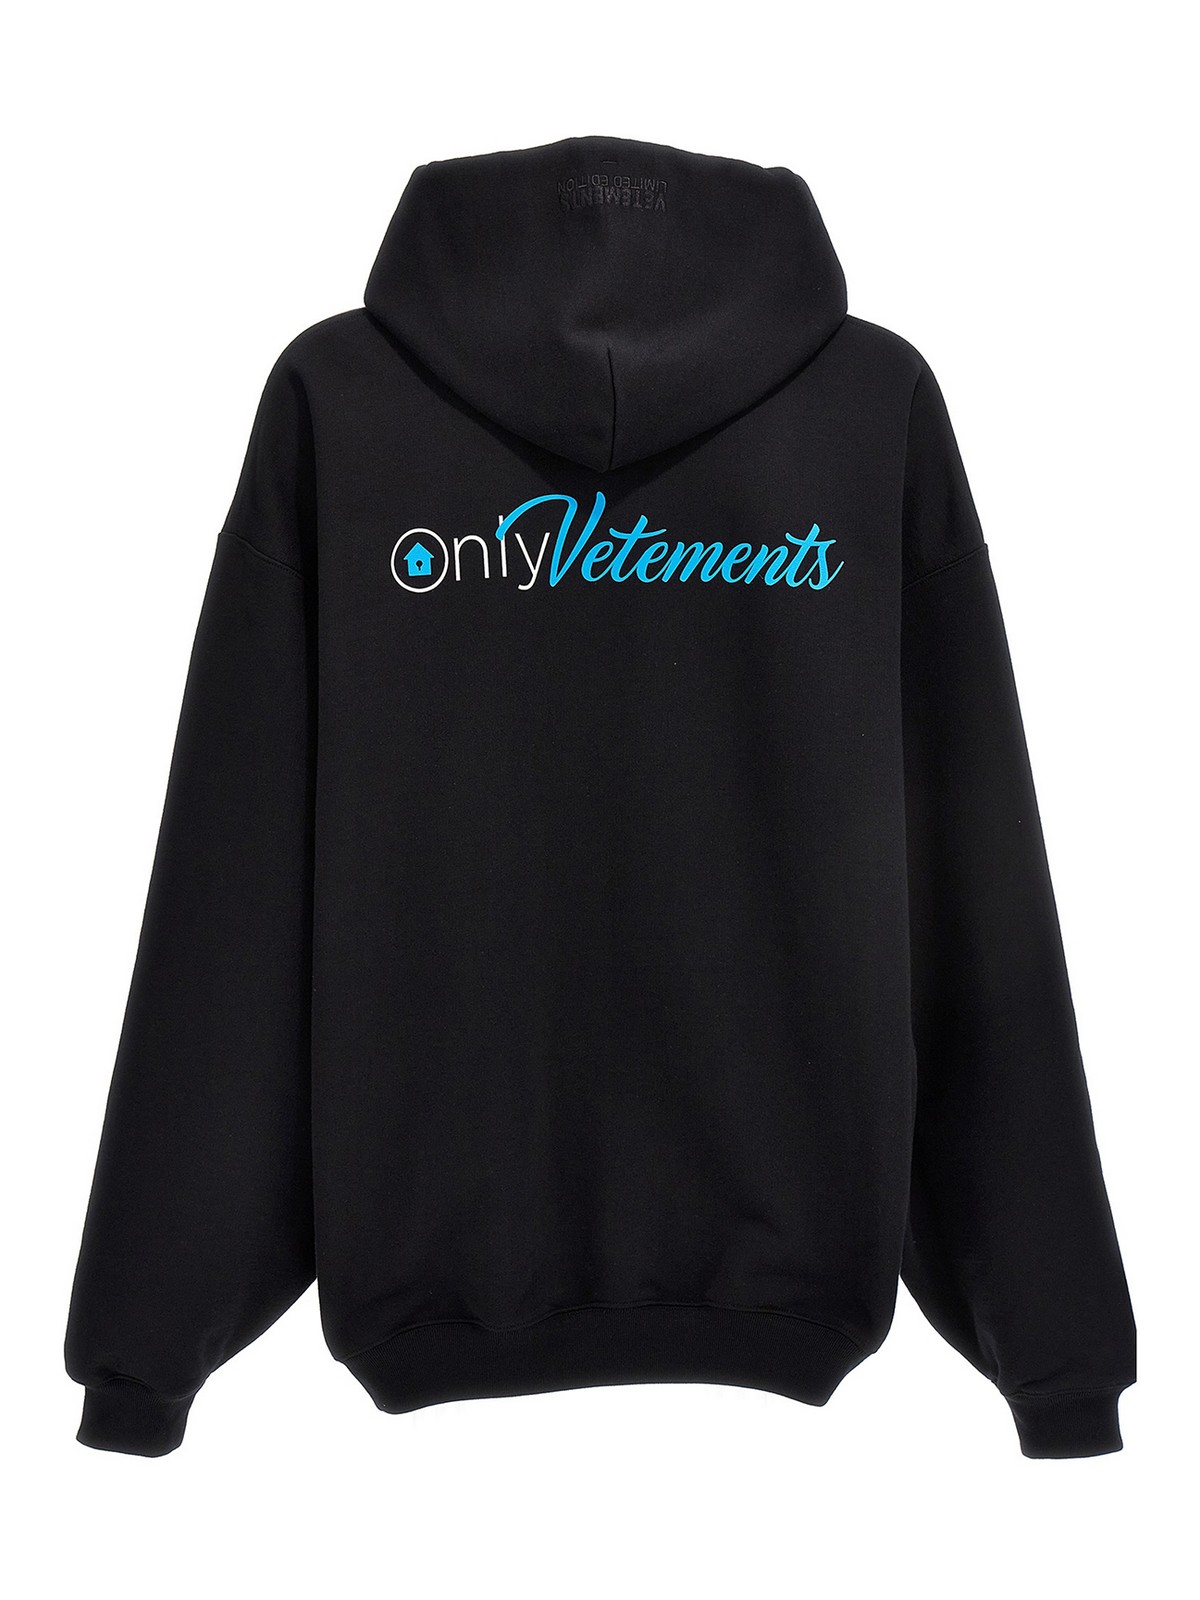 Sweatshirts & Sweaters Vetements - Only vetements hoodie